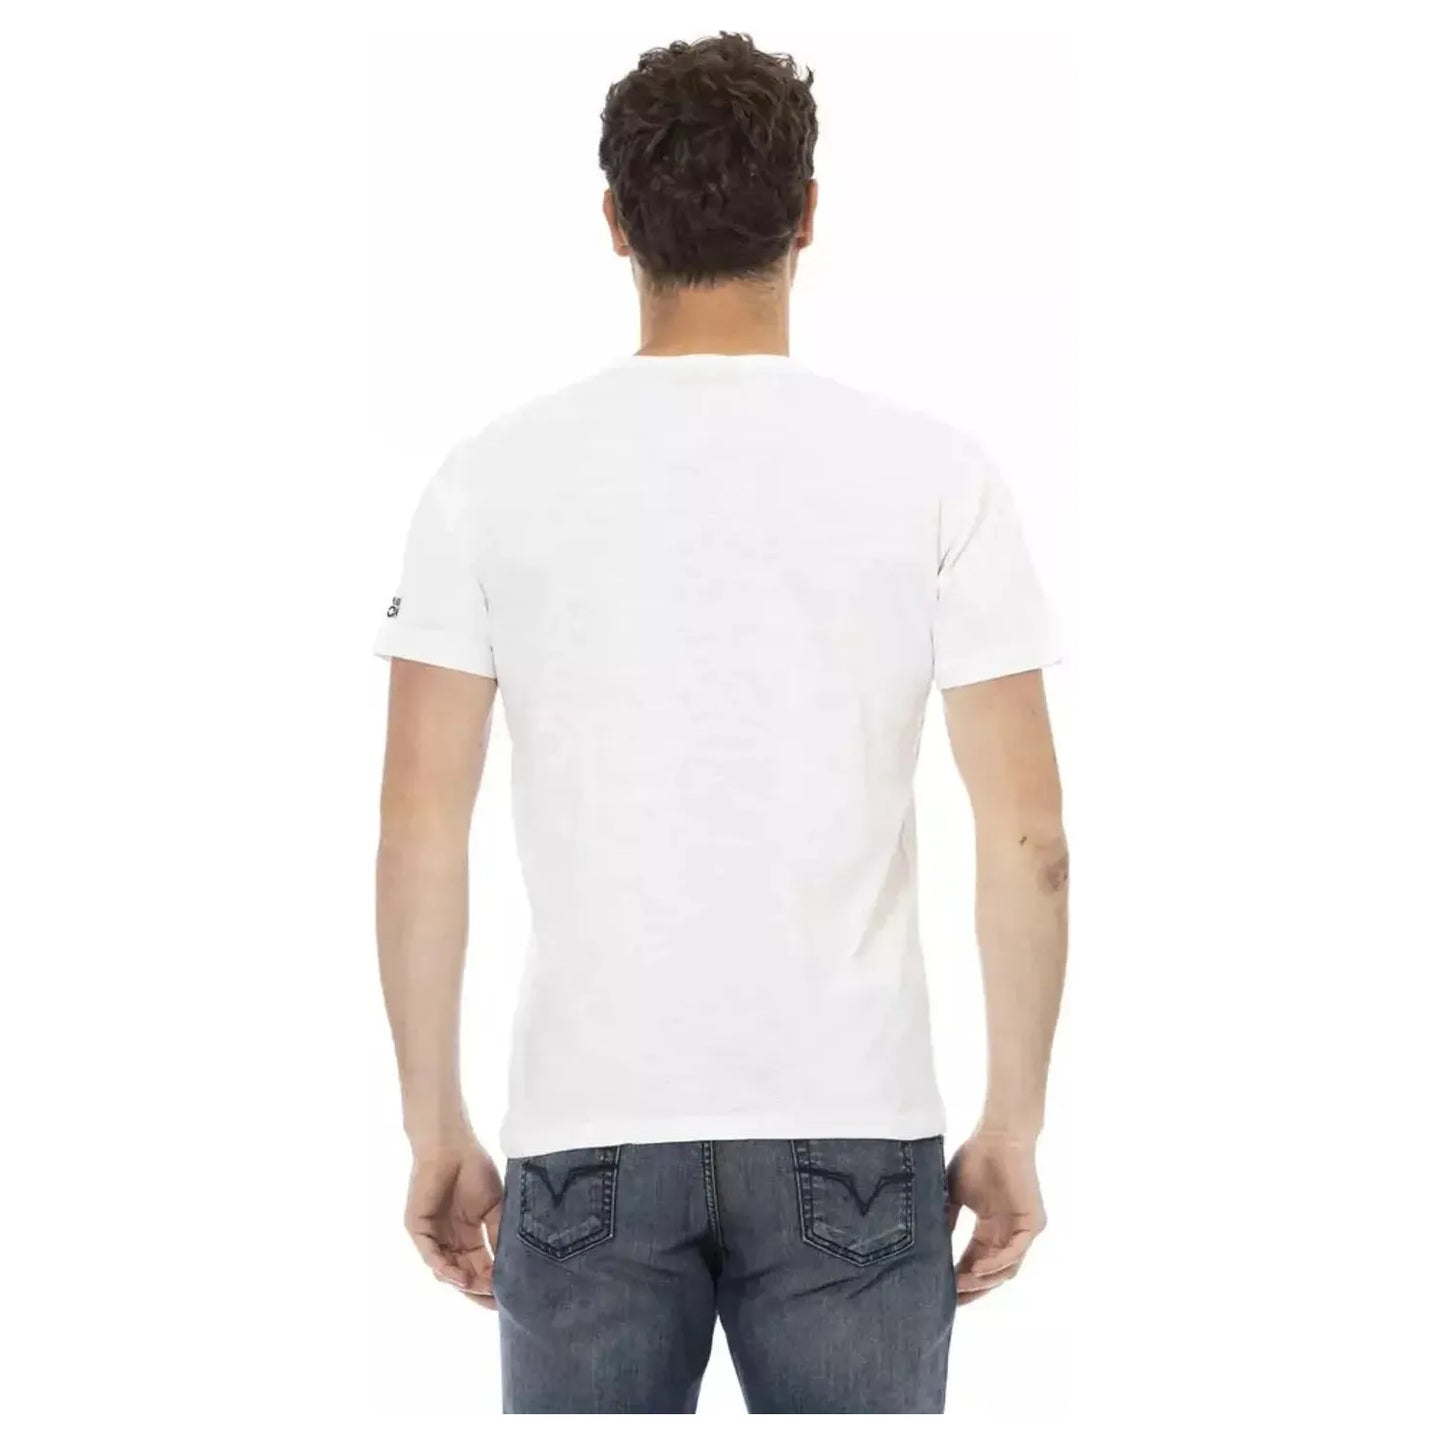 Trussardi Action Elegant White Round Neck Tee with Front Print white-cotton-t-shirt-120